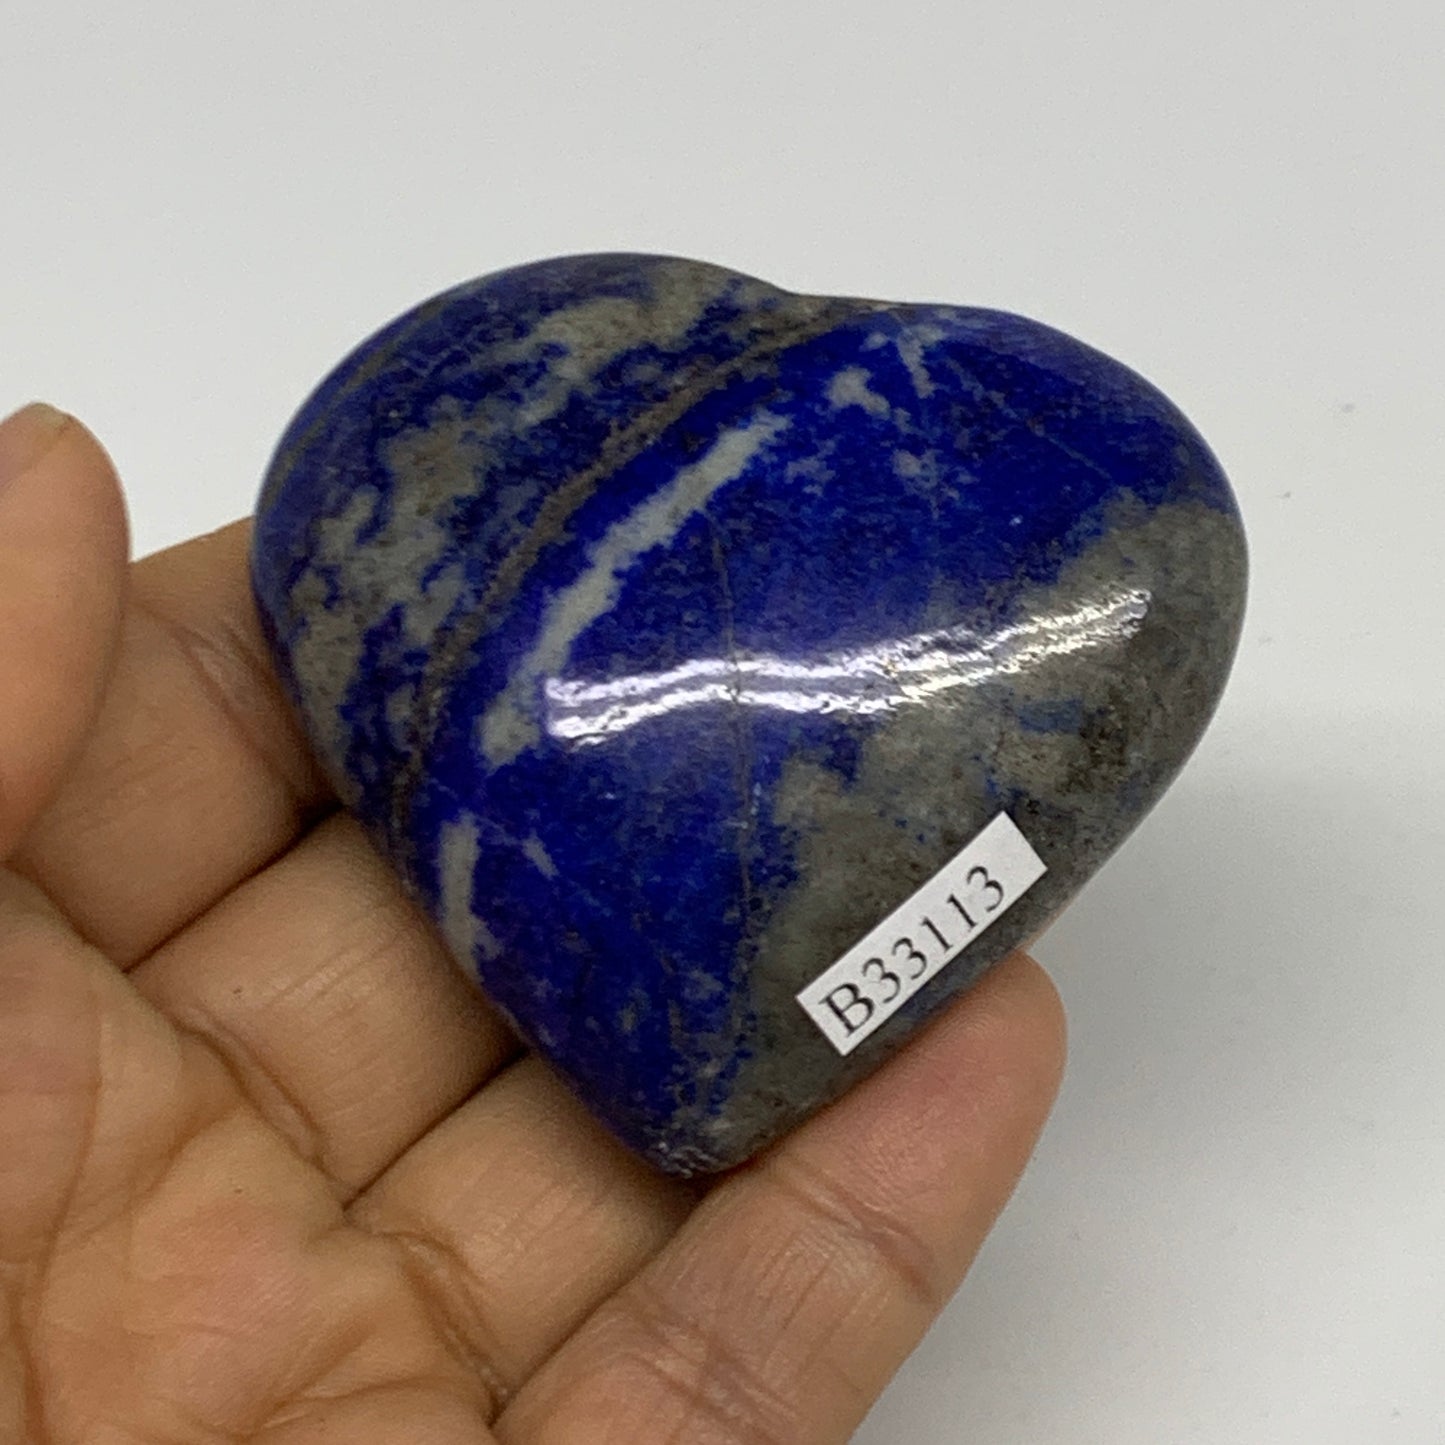 98.3g, 2.2"x2.3"x0.8", Natural Lapis Lazuli Heart Polished Crystal, B33113